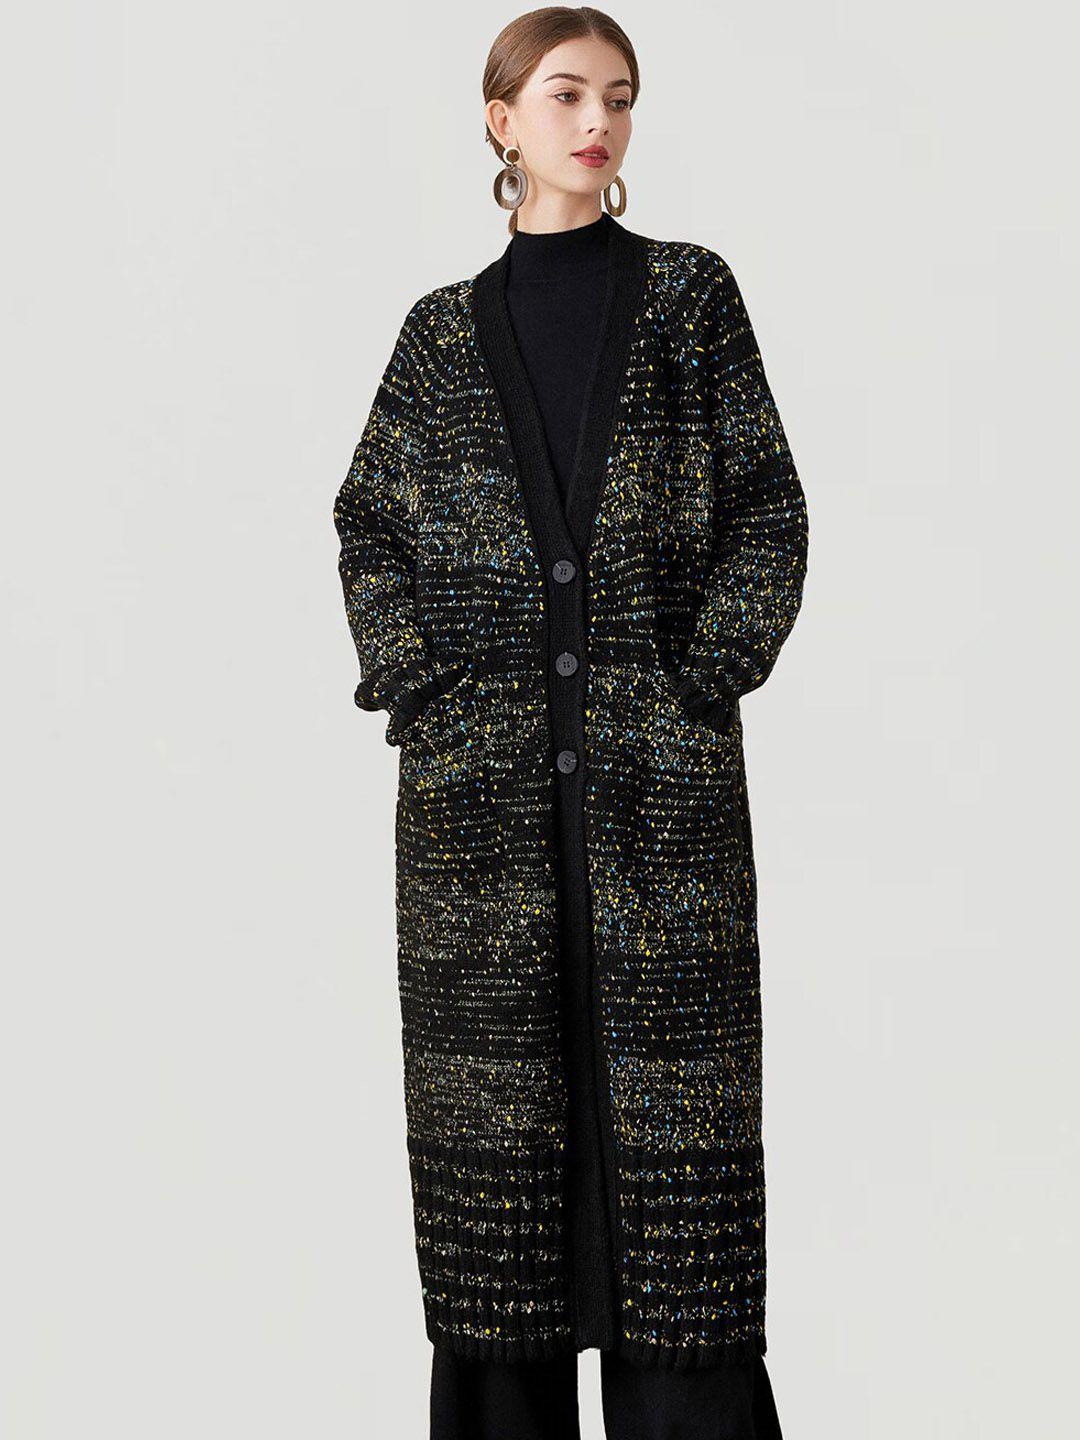 jc collection self designed longline overcoat